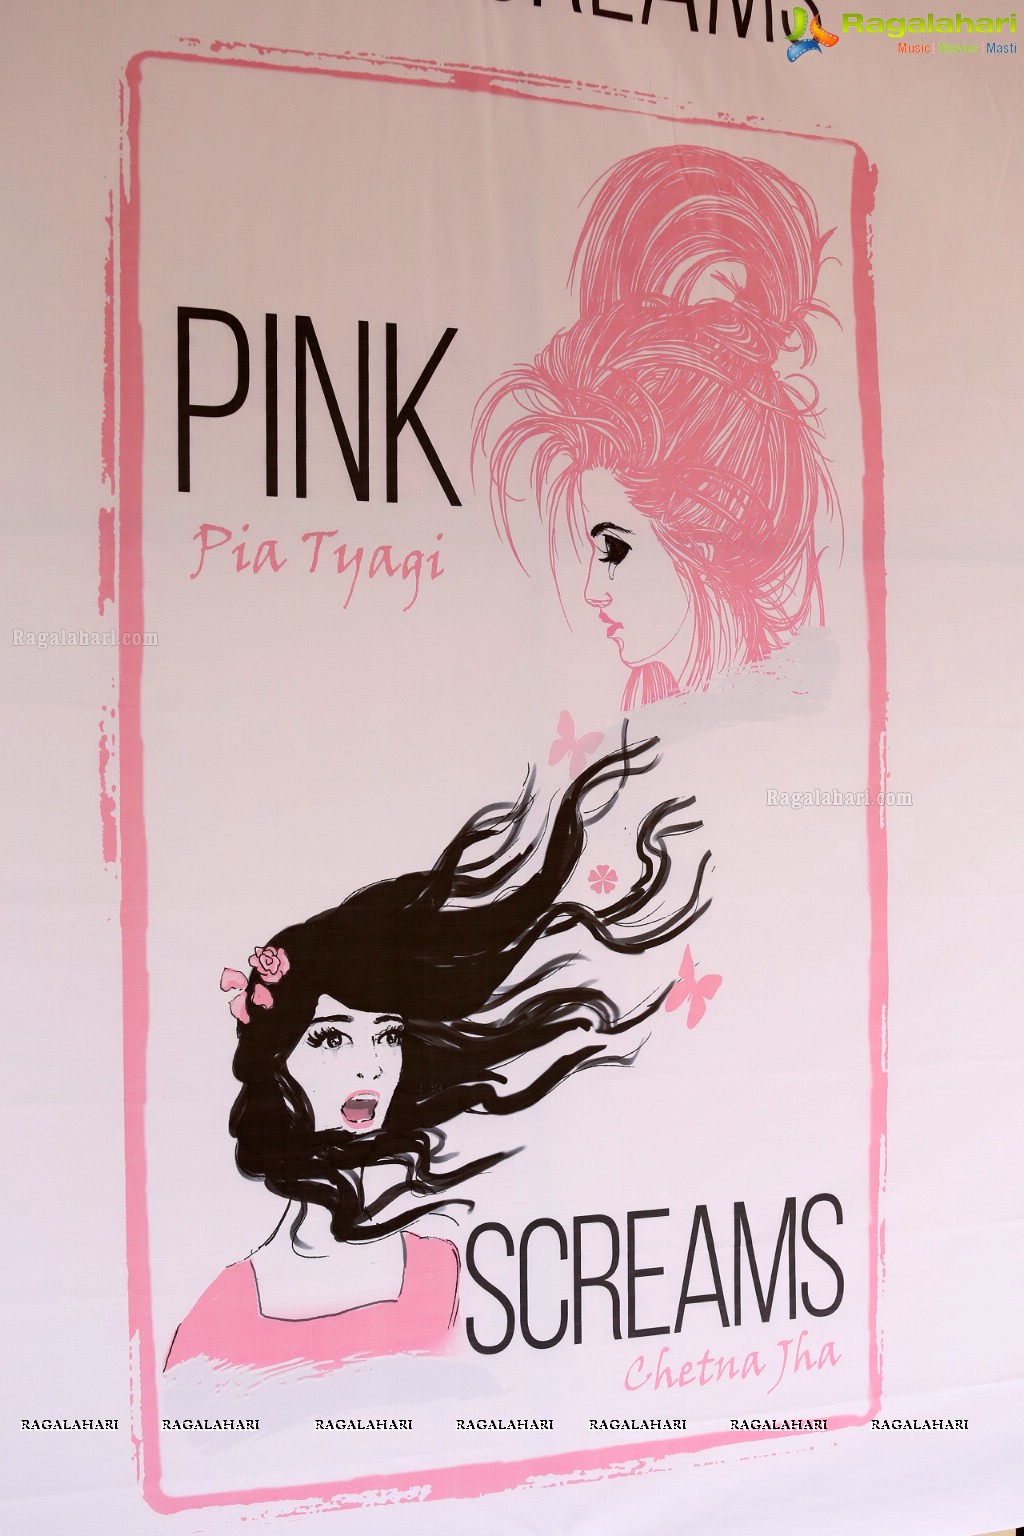 Pink Screams Book Launch